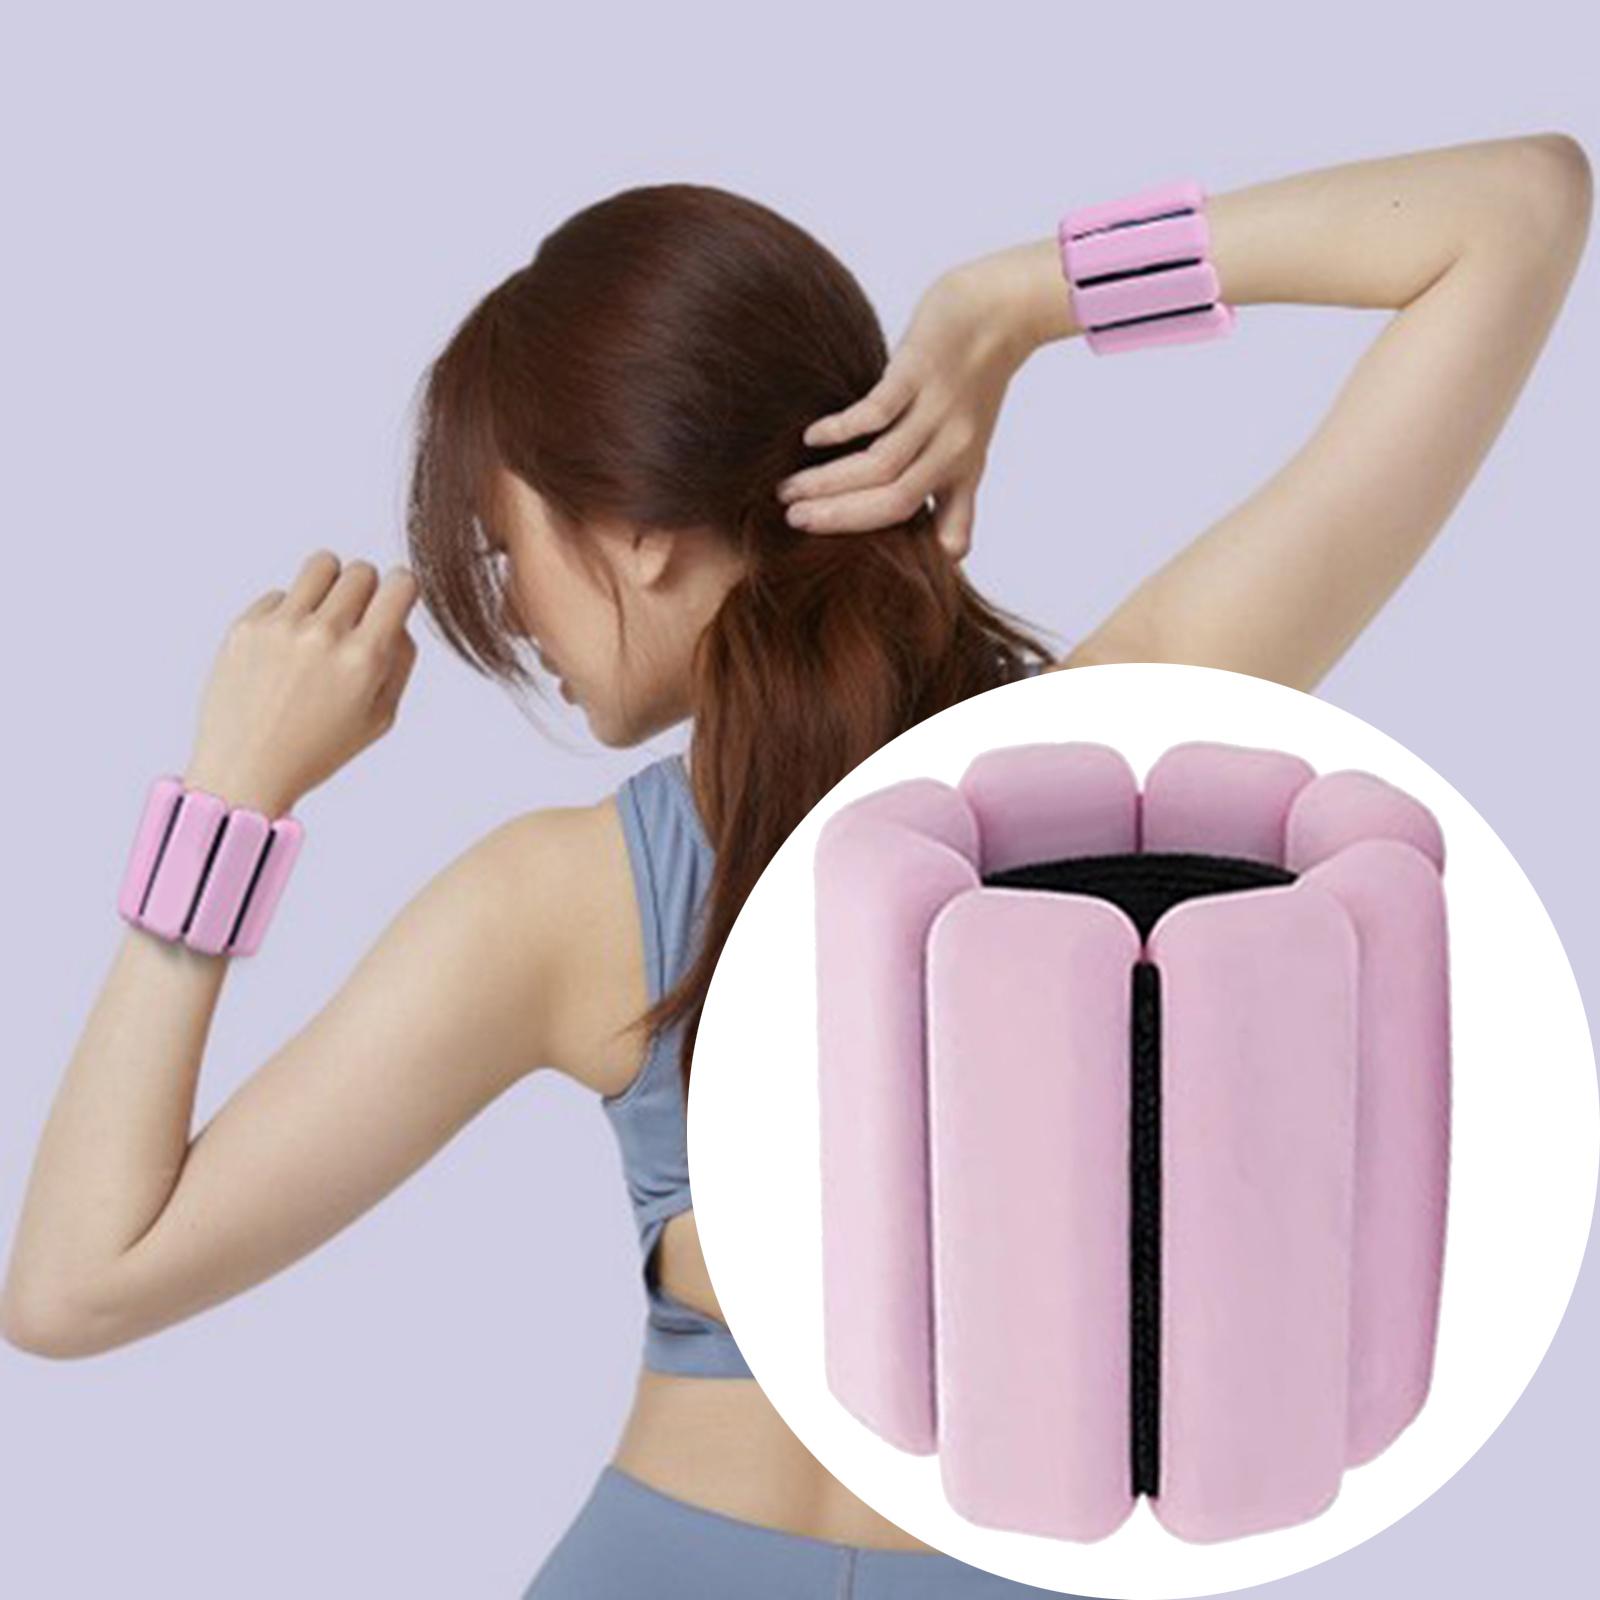 Wrist Weights Bracelet Gym Exercise Yoga Fitness Training Running Pink 1pc